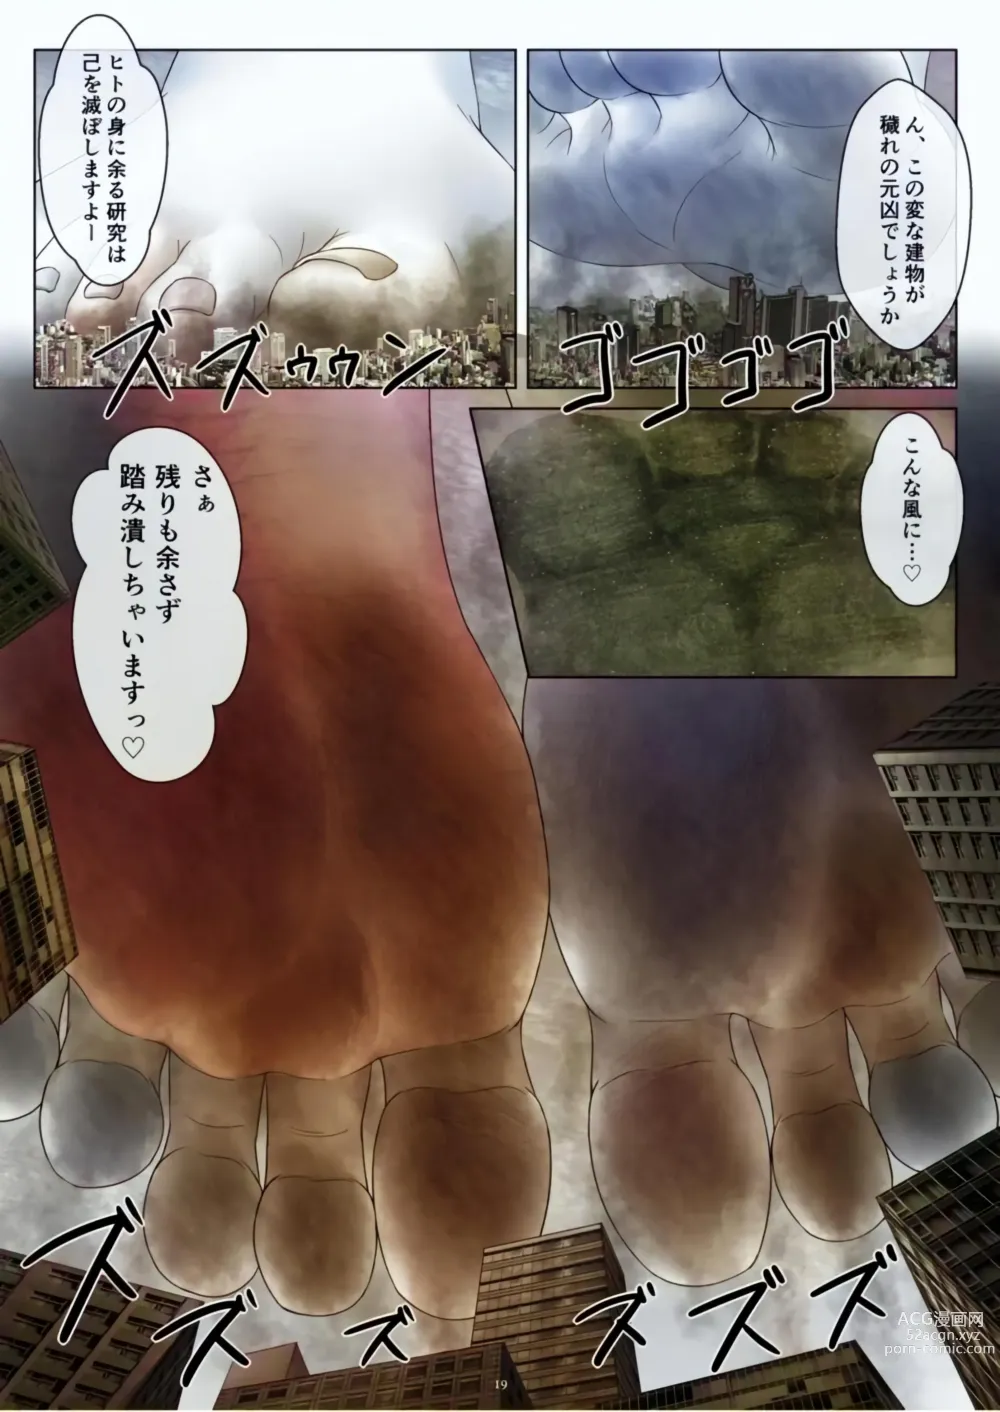 Page 19 of doujinshi Tenshin Ranman Gigantic Extreme 8th [Digital] - AI Colored